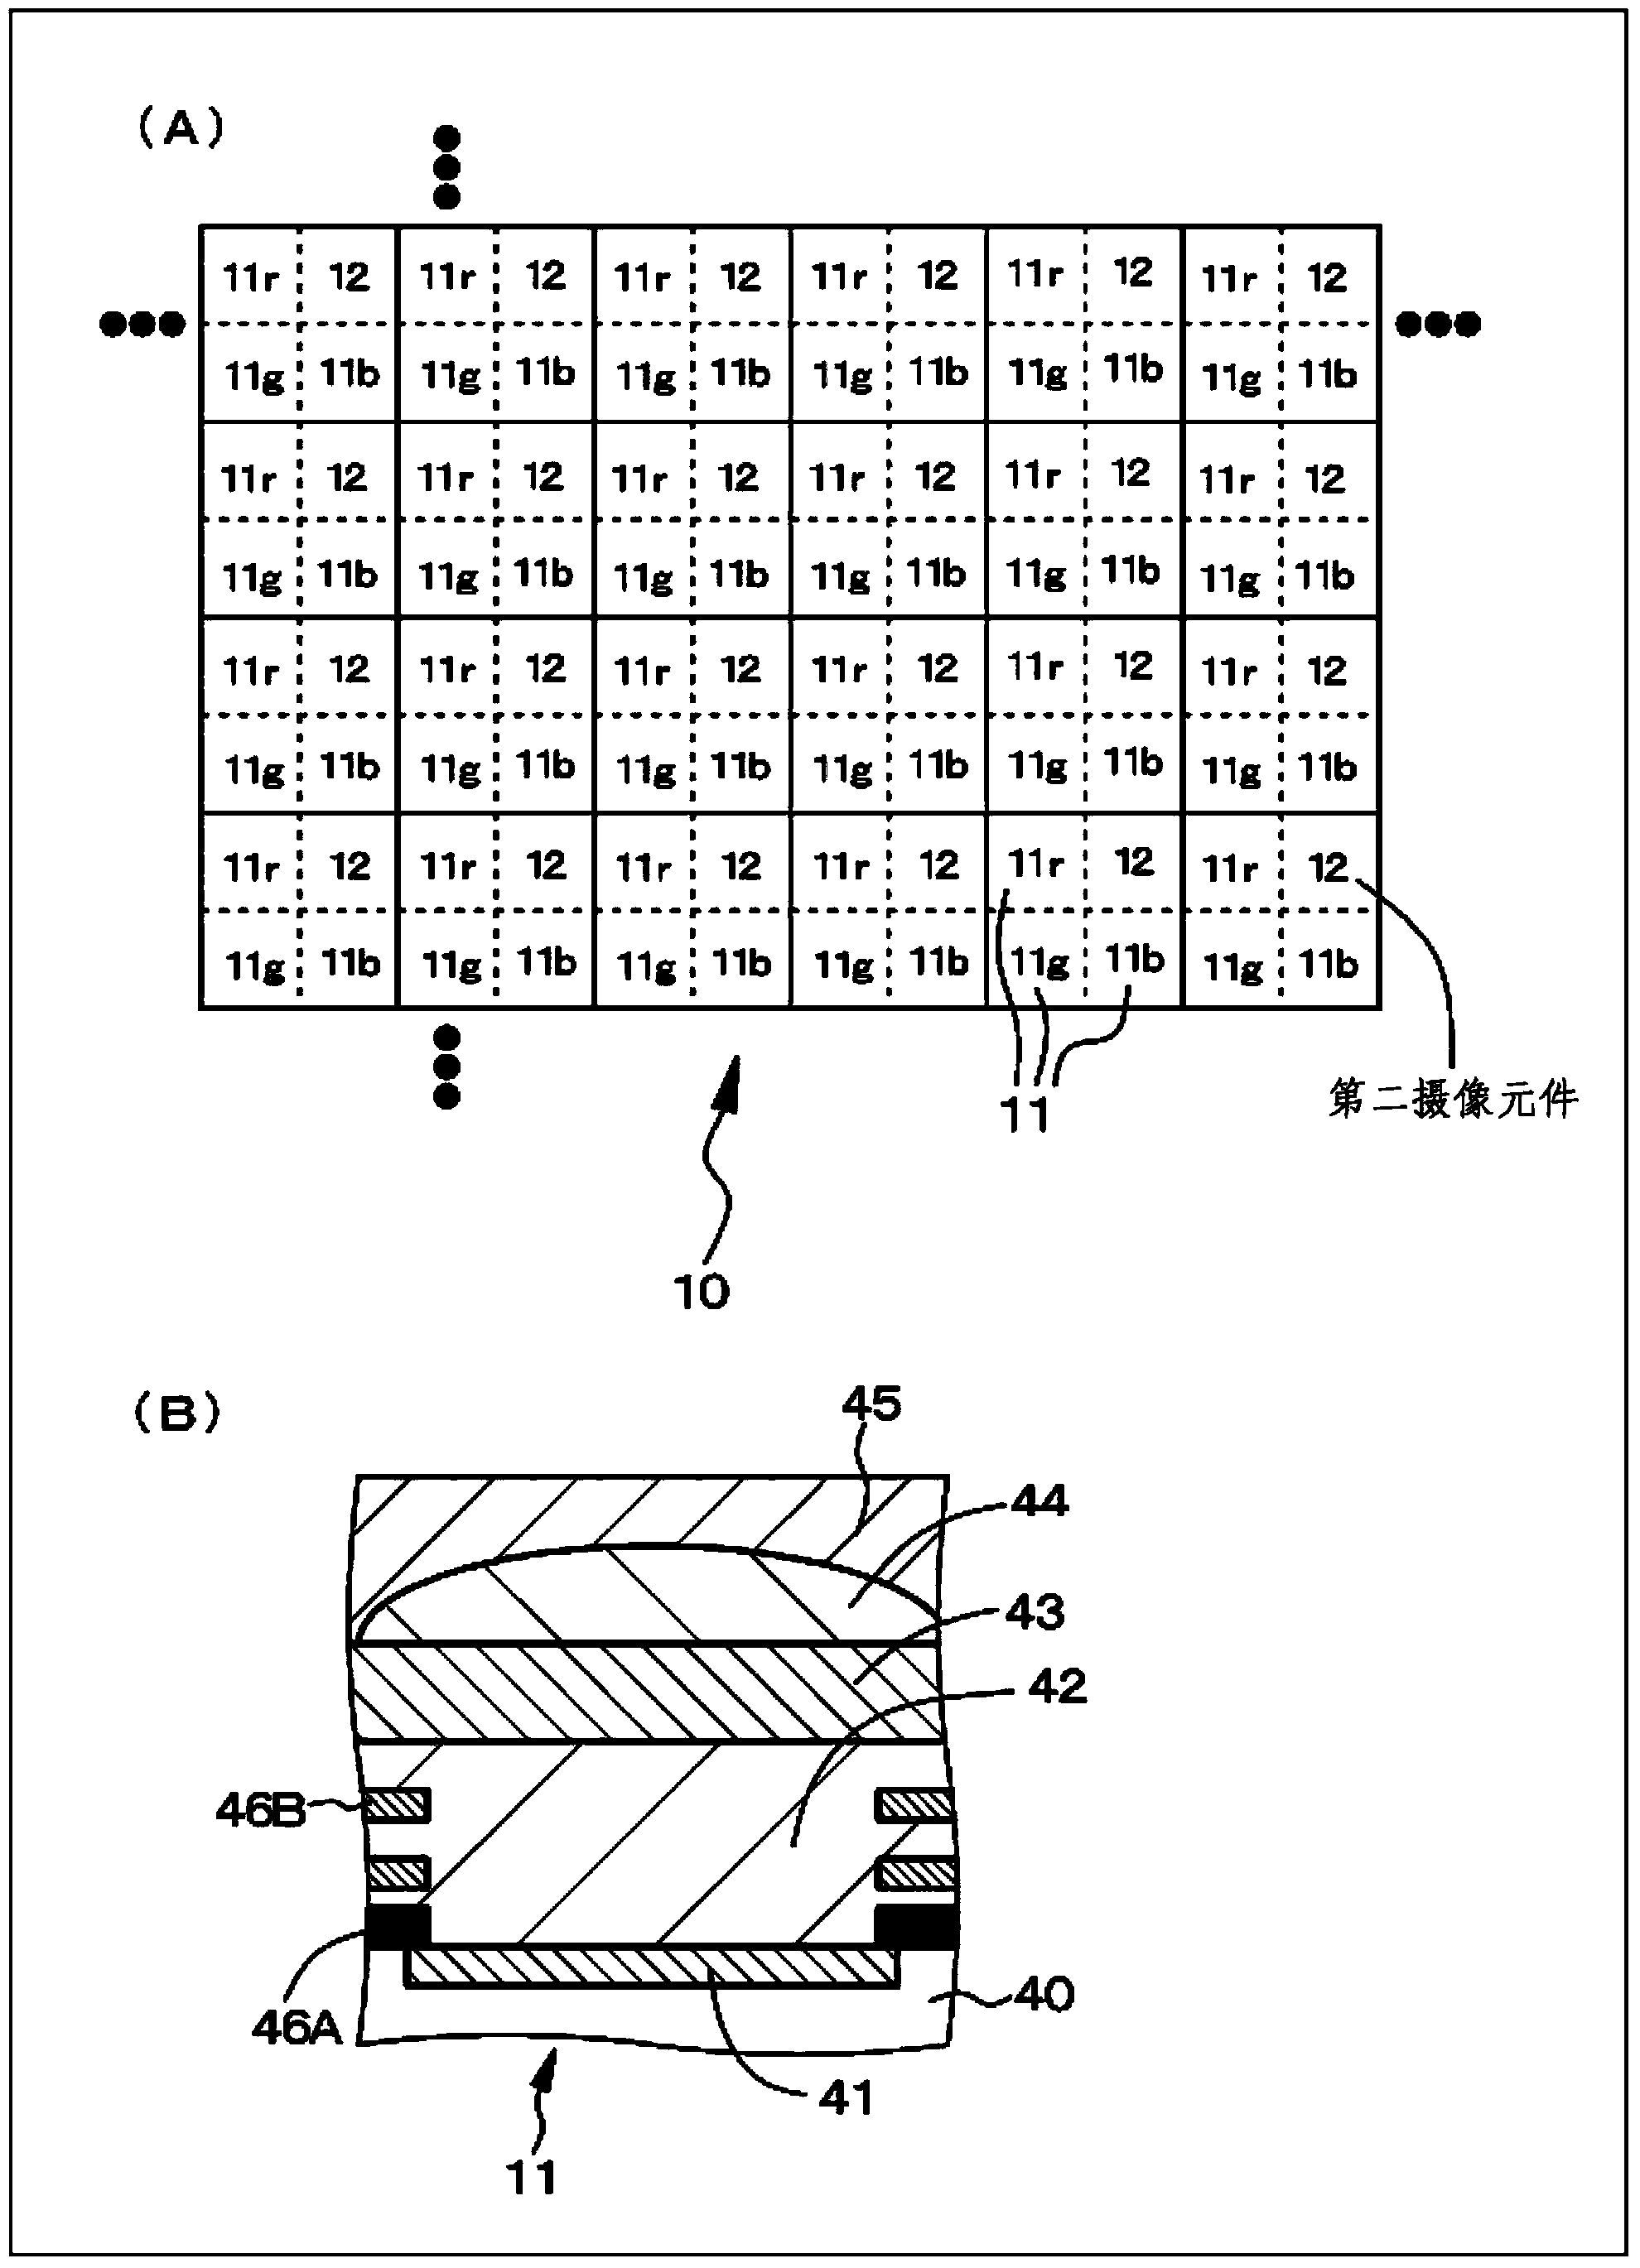 Image pickup apparatus and filter